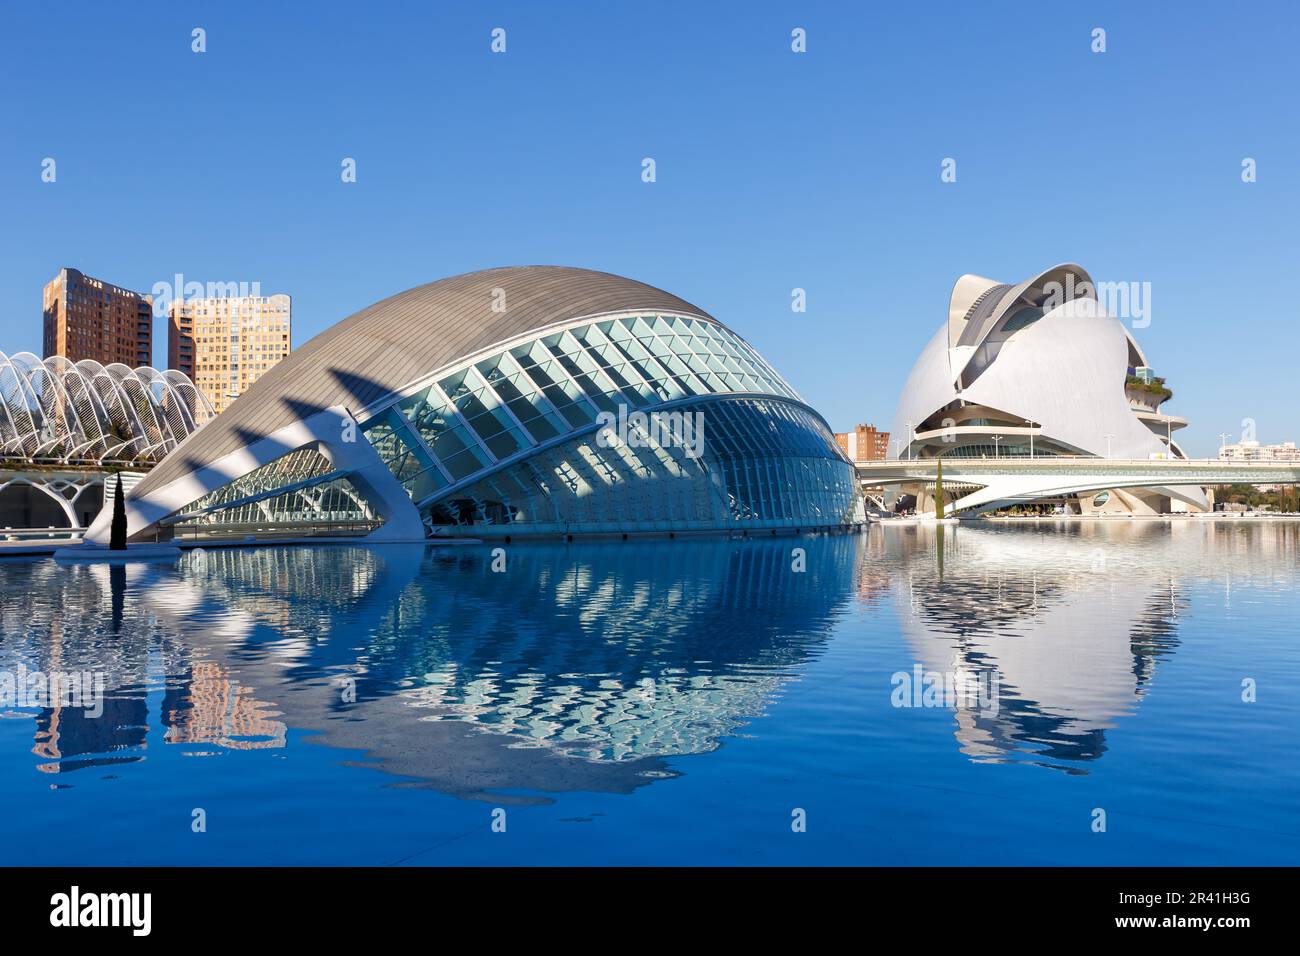 Ciutat de les Arts i les Ciencies Moderne Architektur von Santiago Calatrava in Valencia, Spanien Stockfoto